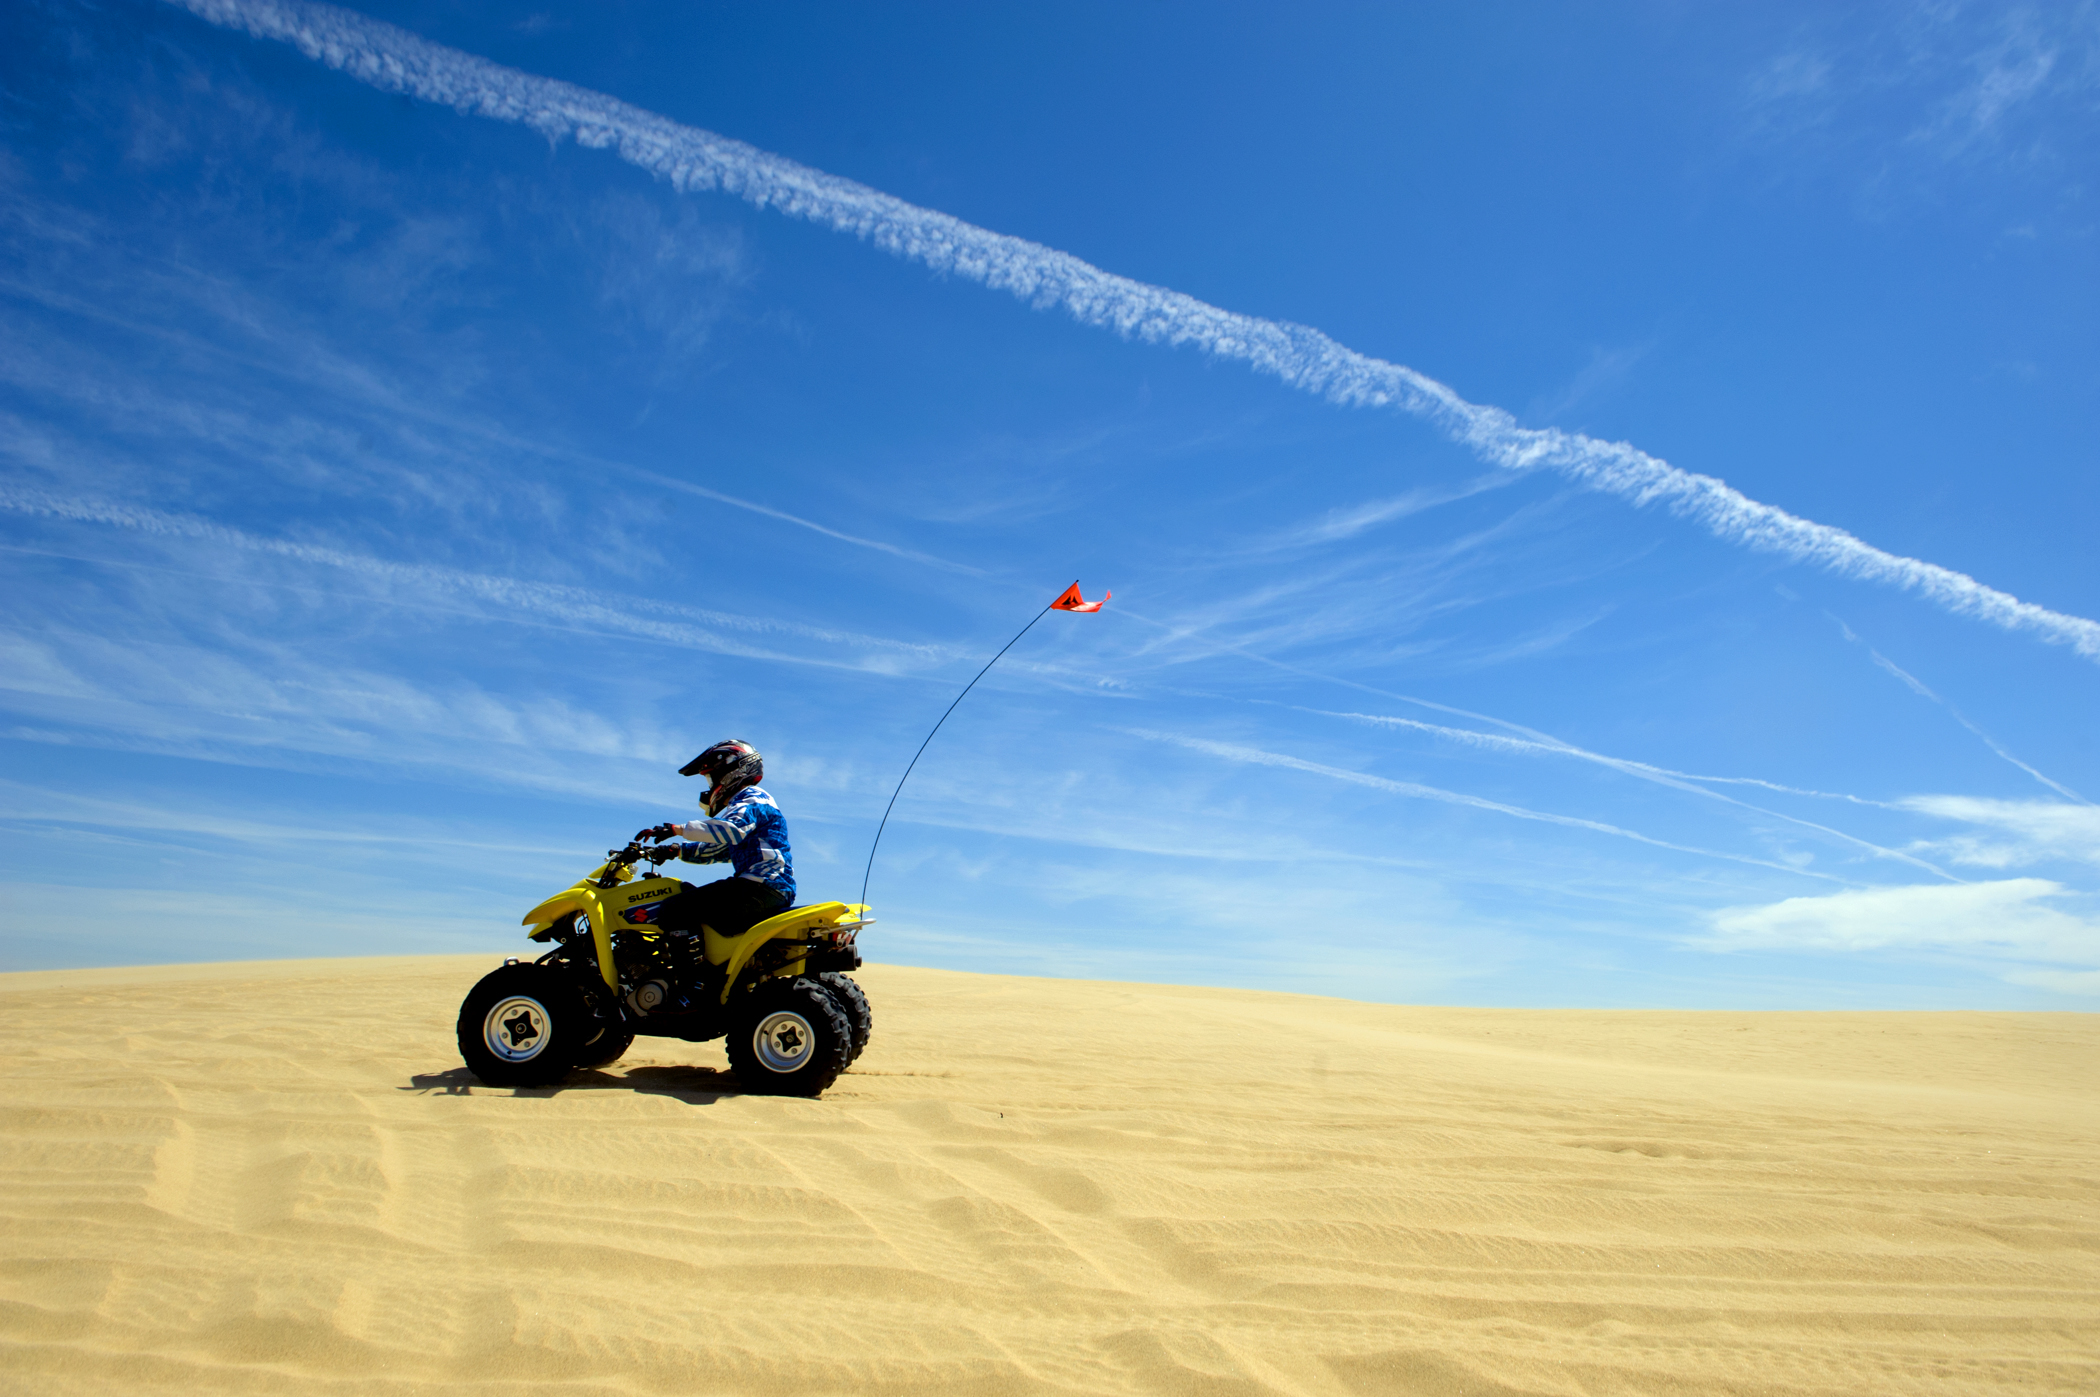 ATV riding on a dune